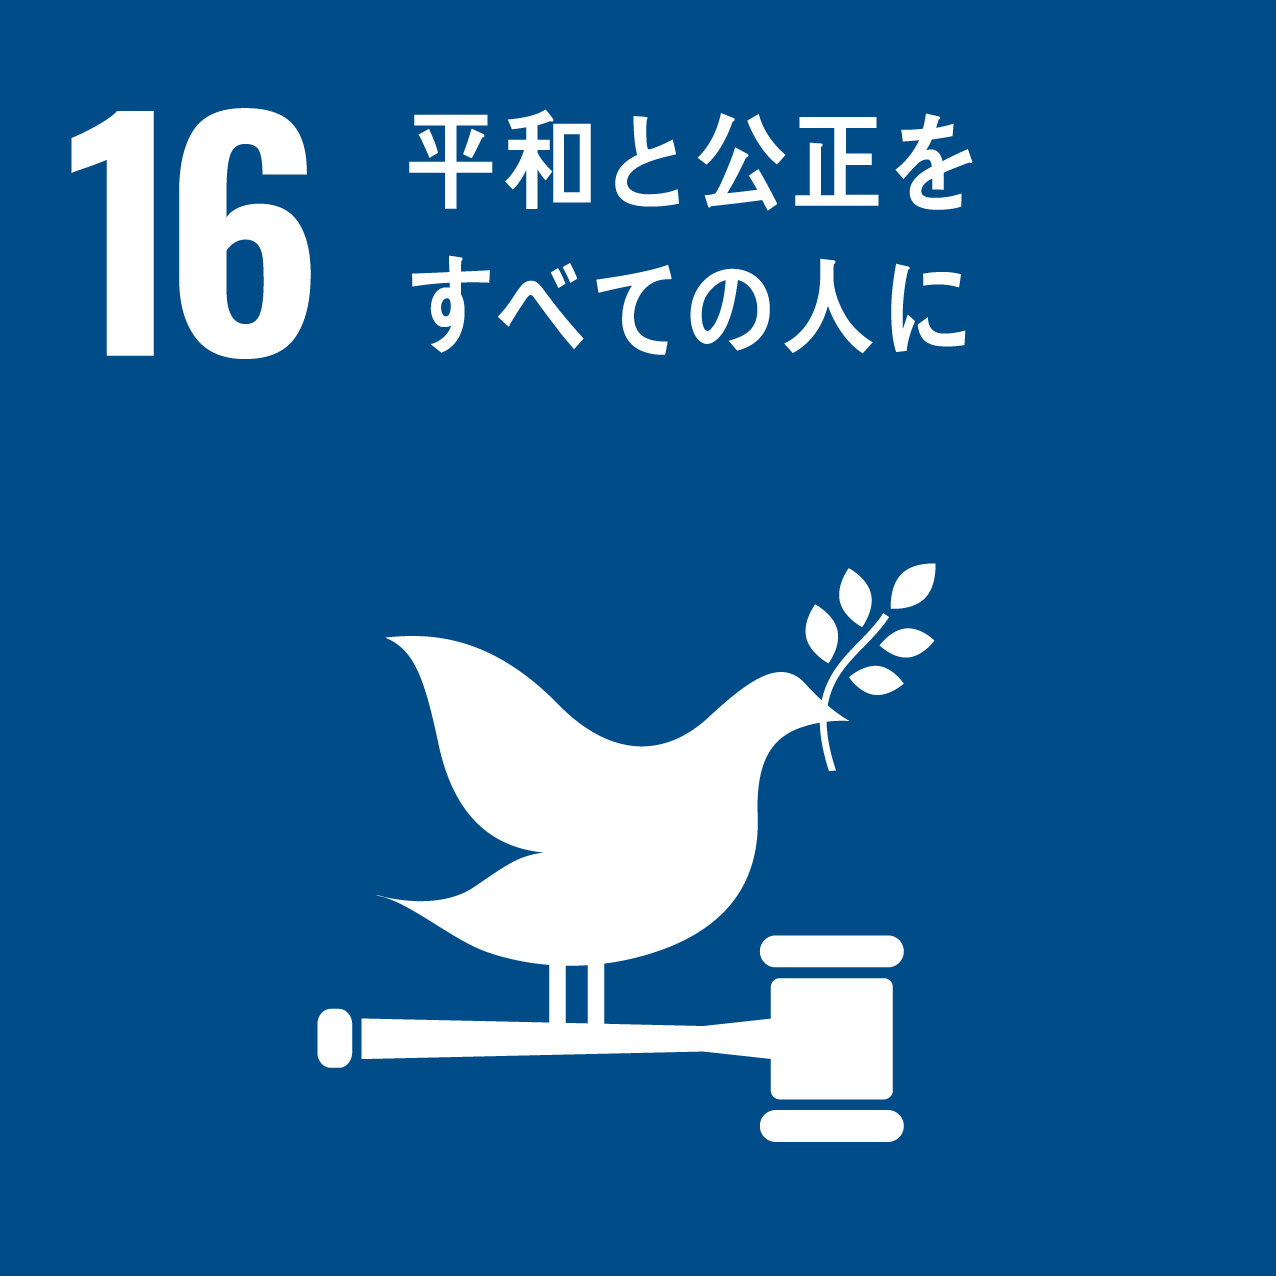 SDGs17の目標のうち、16平和と公正を全ての人に